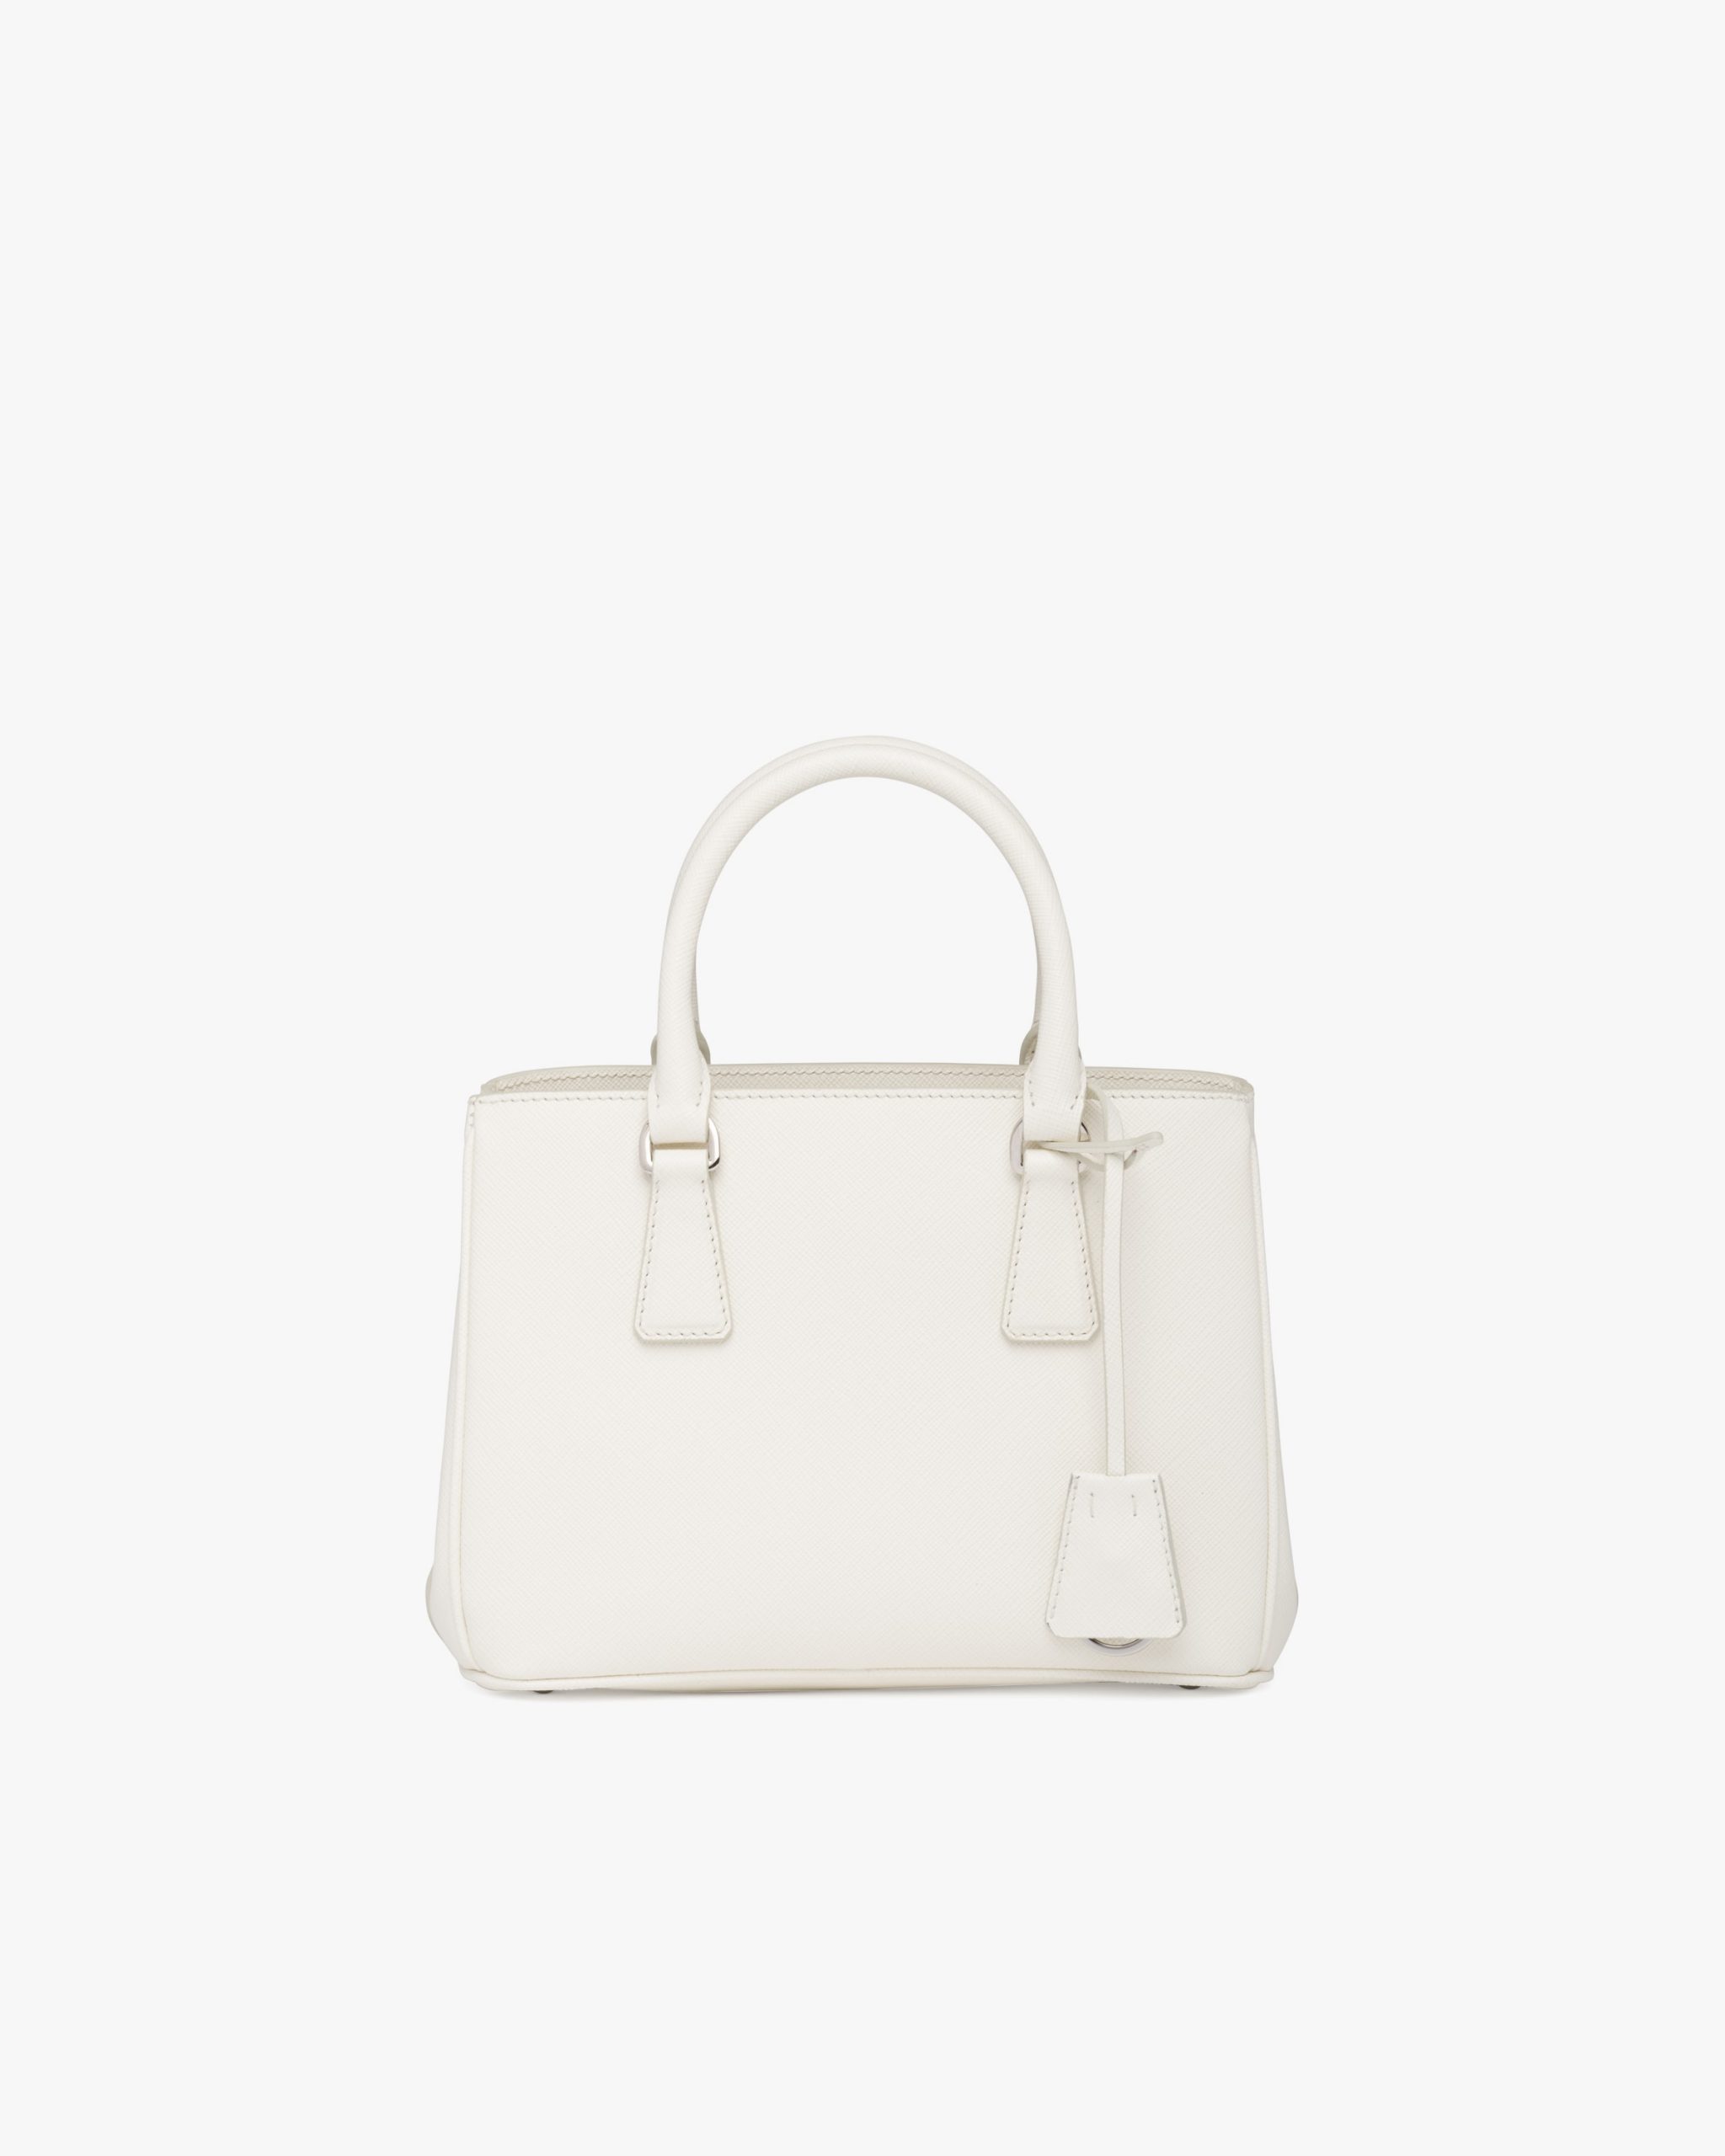 Prada Galleria Unboxing! ~ White Prada Galleria Saffiano Leather Size Small  